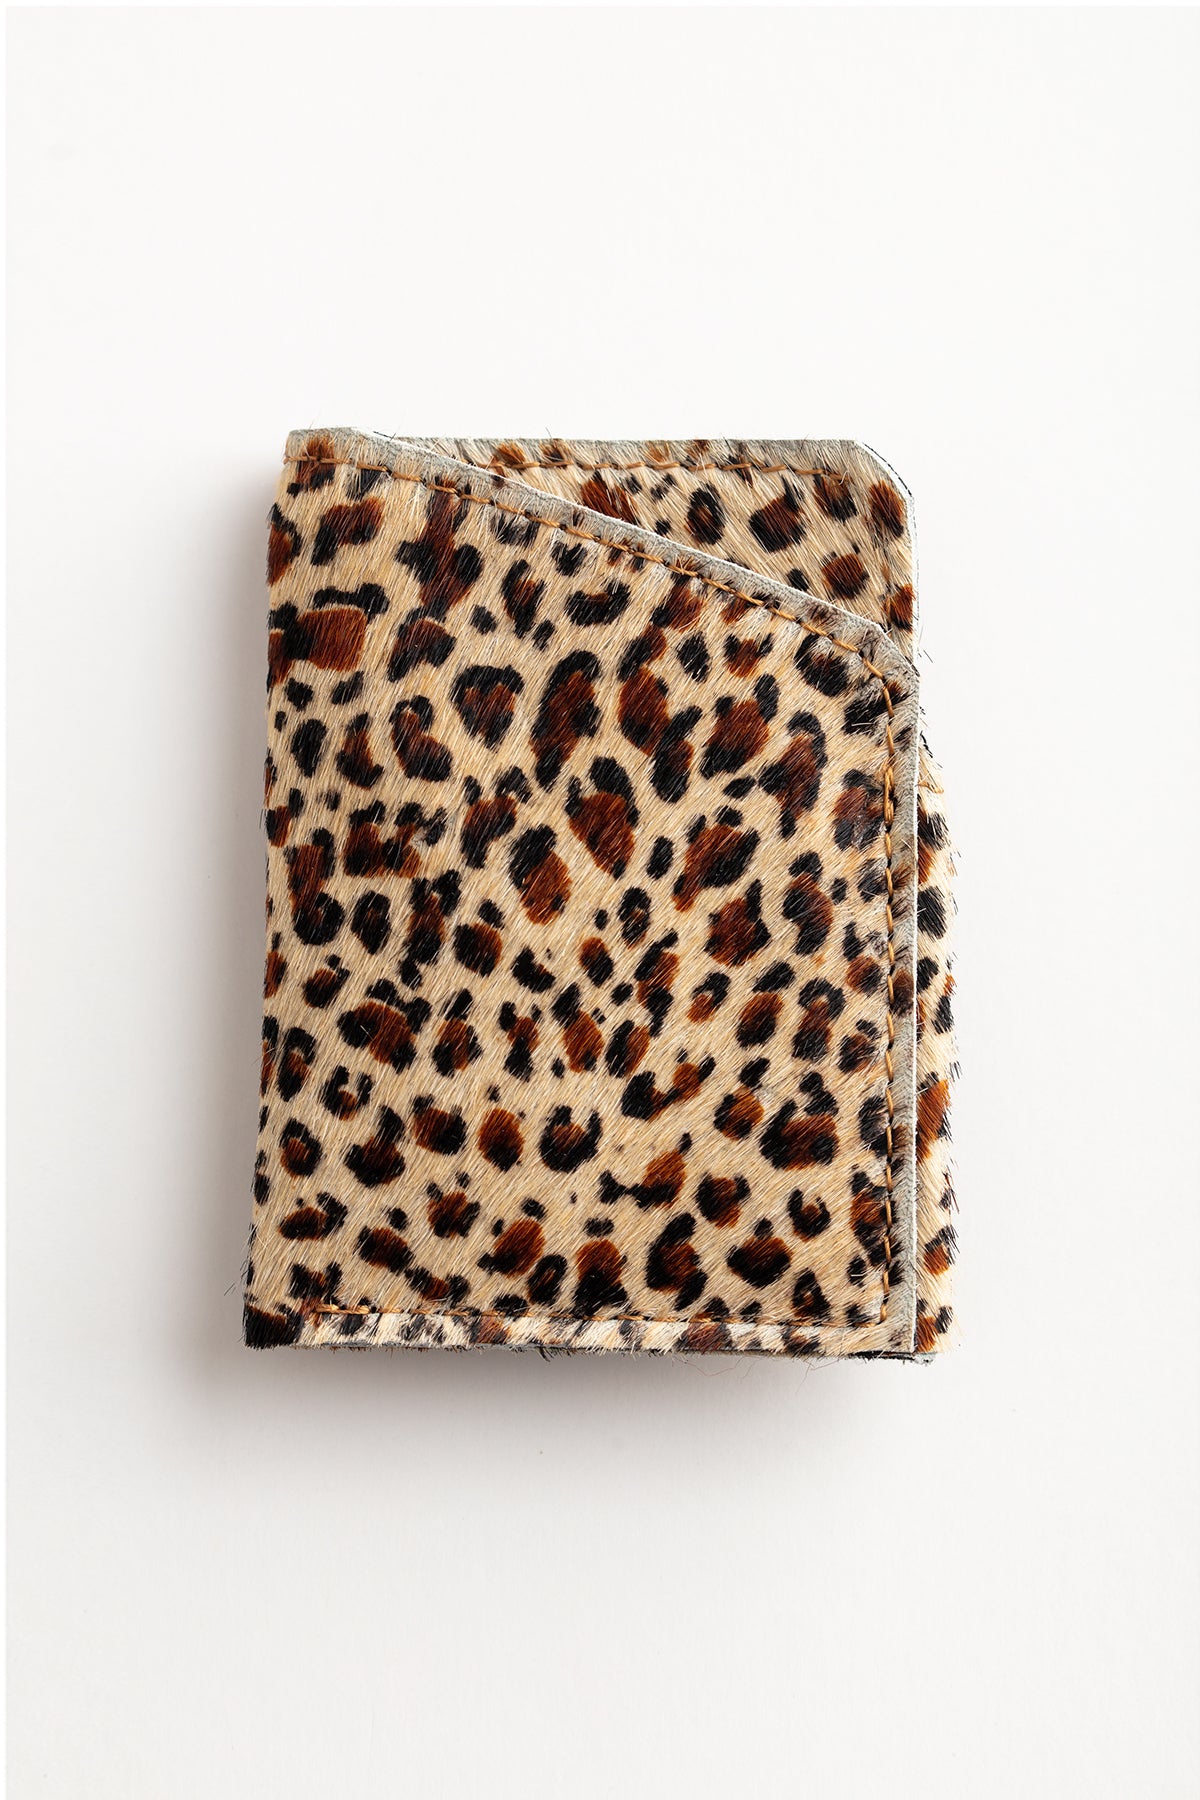   A minimalist leopard print SOFT LEATHER CARD HOLDER created by local artisans, Lima Sagrada. 